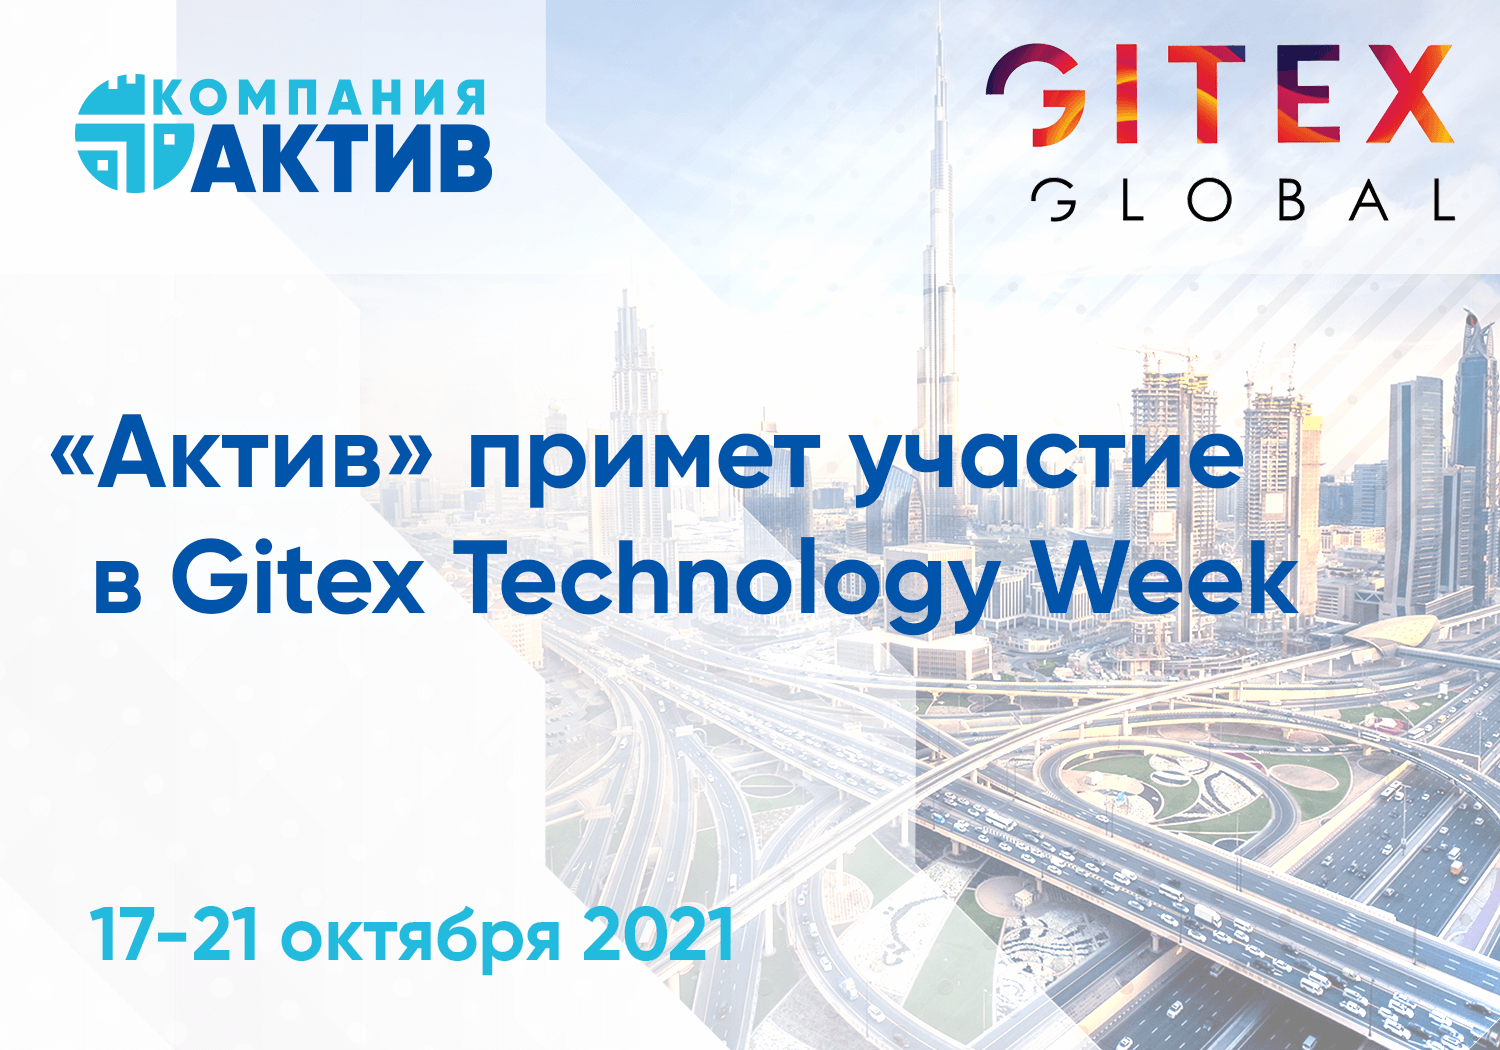 Компания «Актив» представит на Gitex Technology Week продукты и решения для кибербезопасности